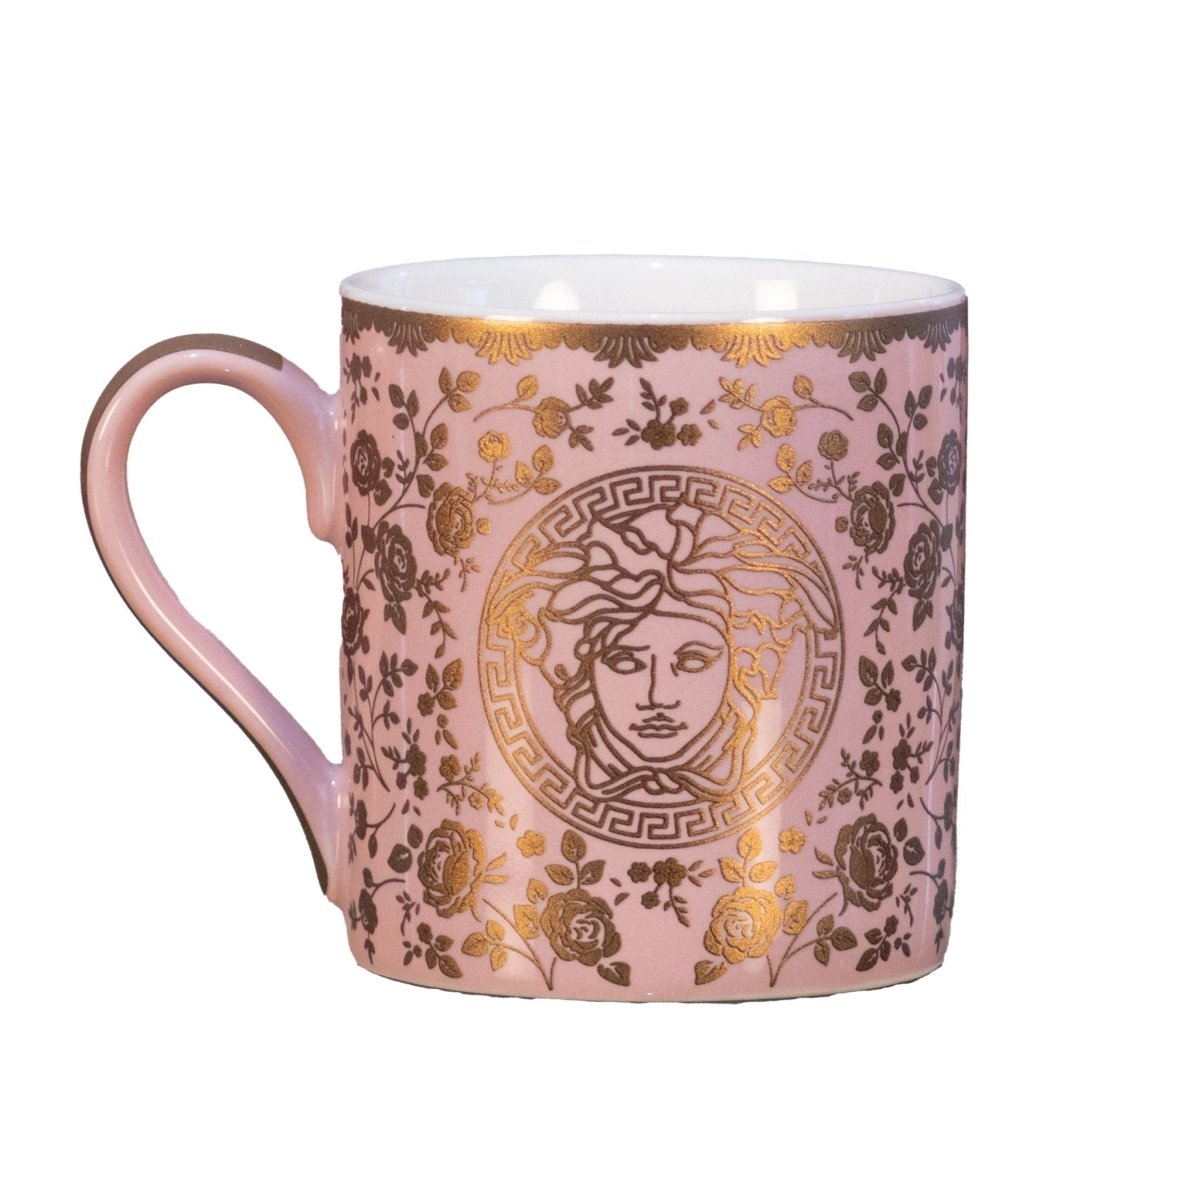 Premium Bone China Pink and Gold Design - 6 Pc Mug Set Serves as Tea Cups, Coffee Cups, Tea Mugs, Coffee Mugs - Kezevel